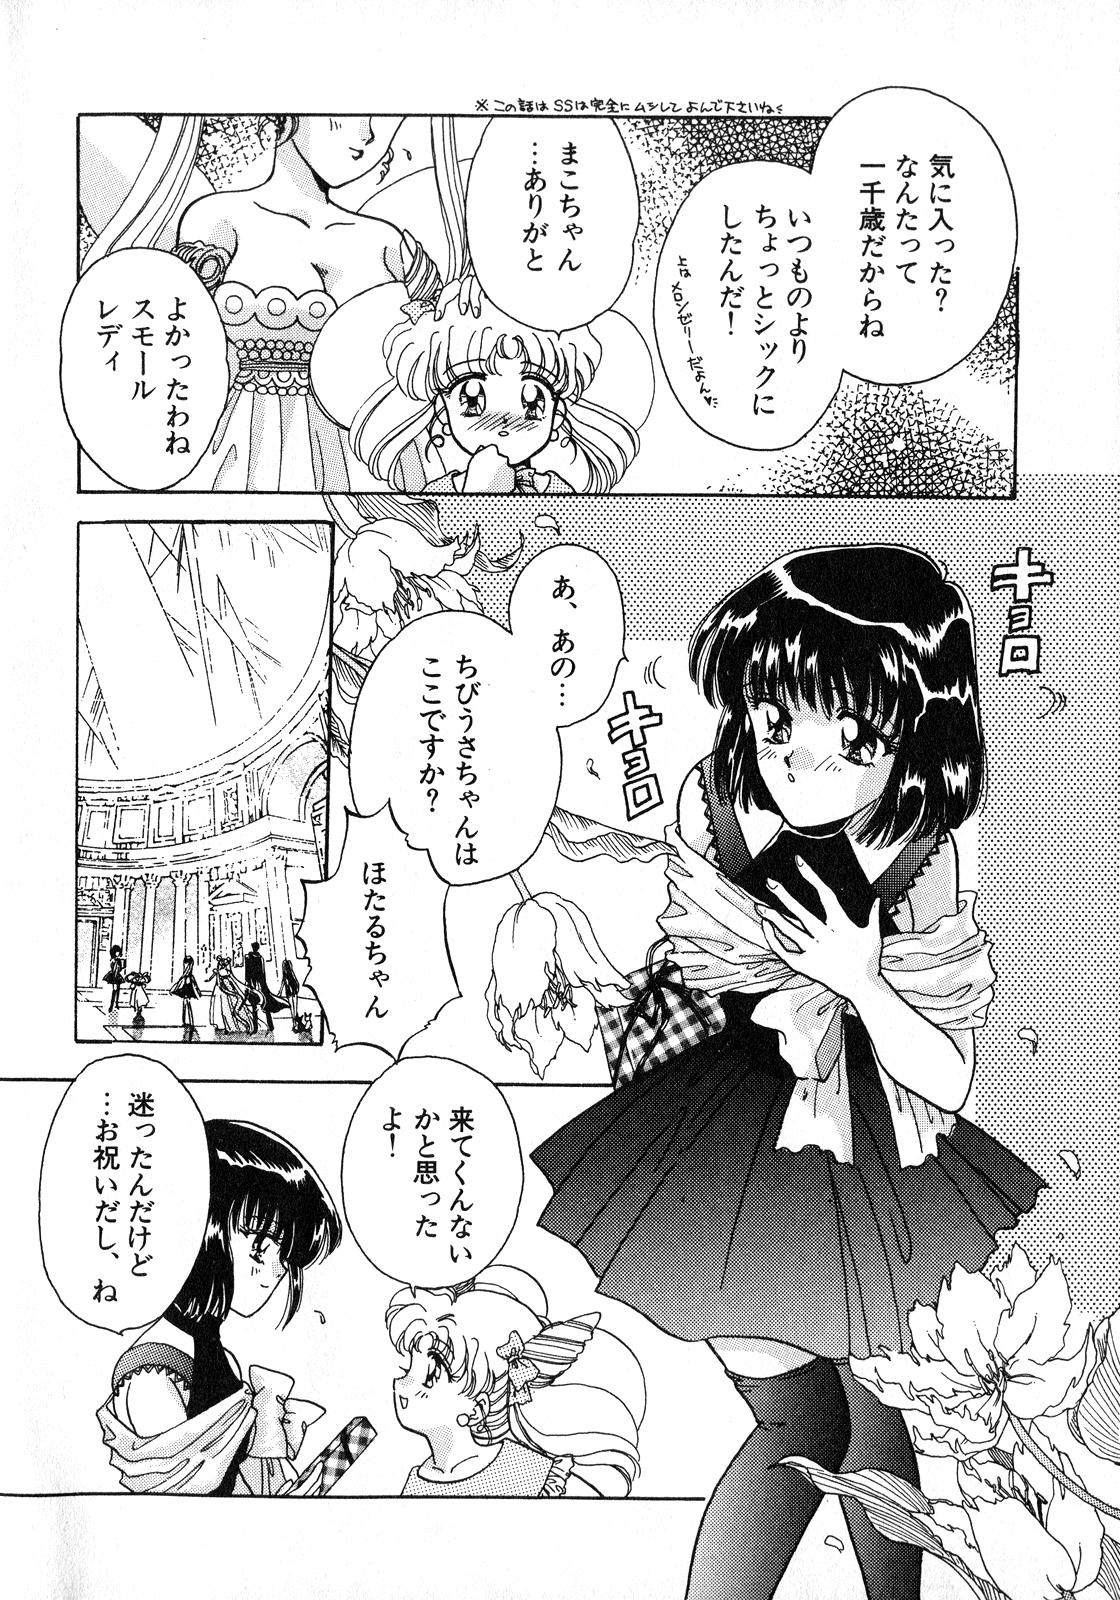 Bisexual Lunatic Party 8 - Sailor moon Coroa - Page 5